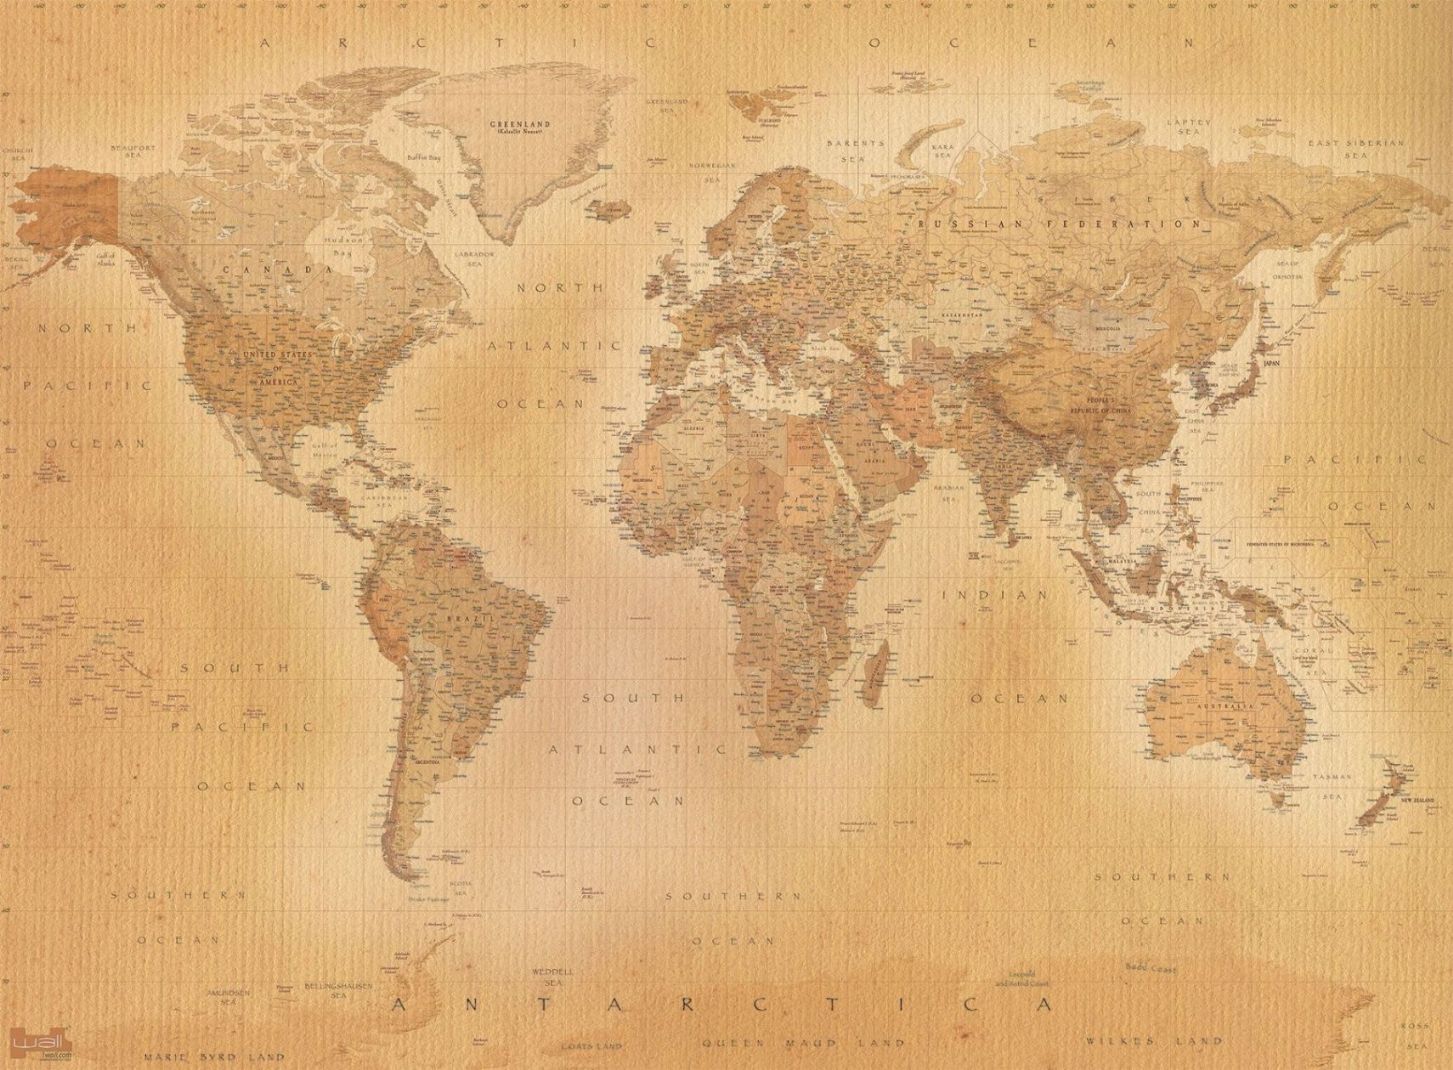 Giant vintage world map wallpaper murals Online store